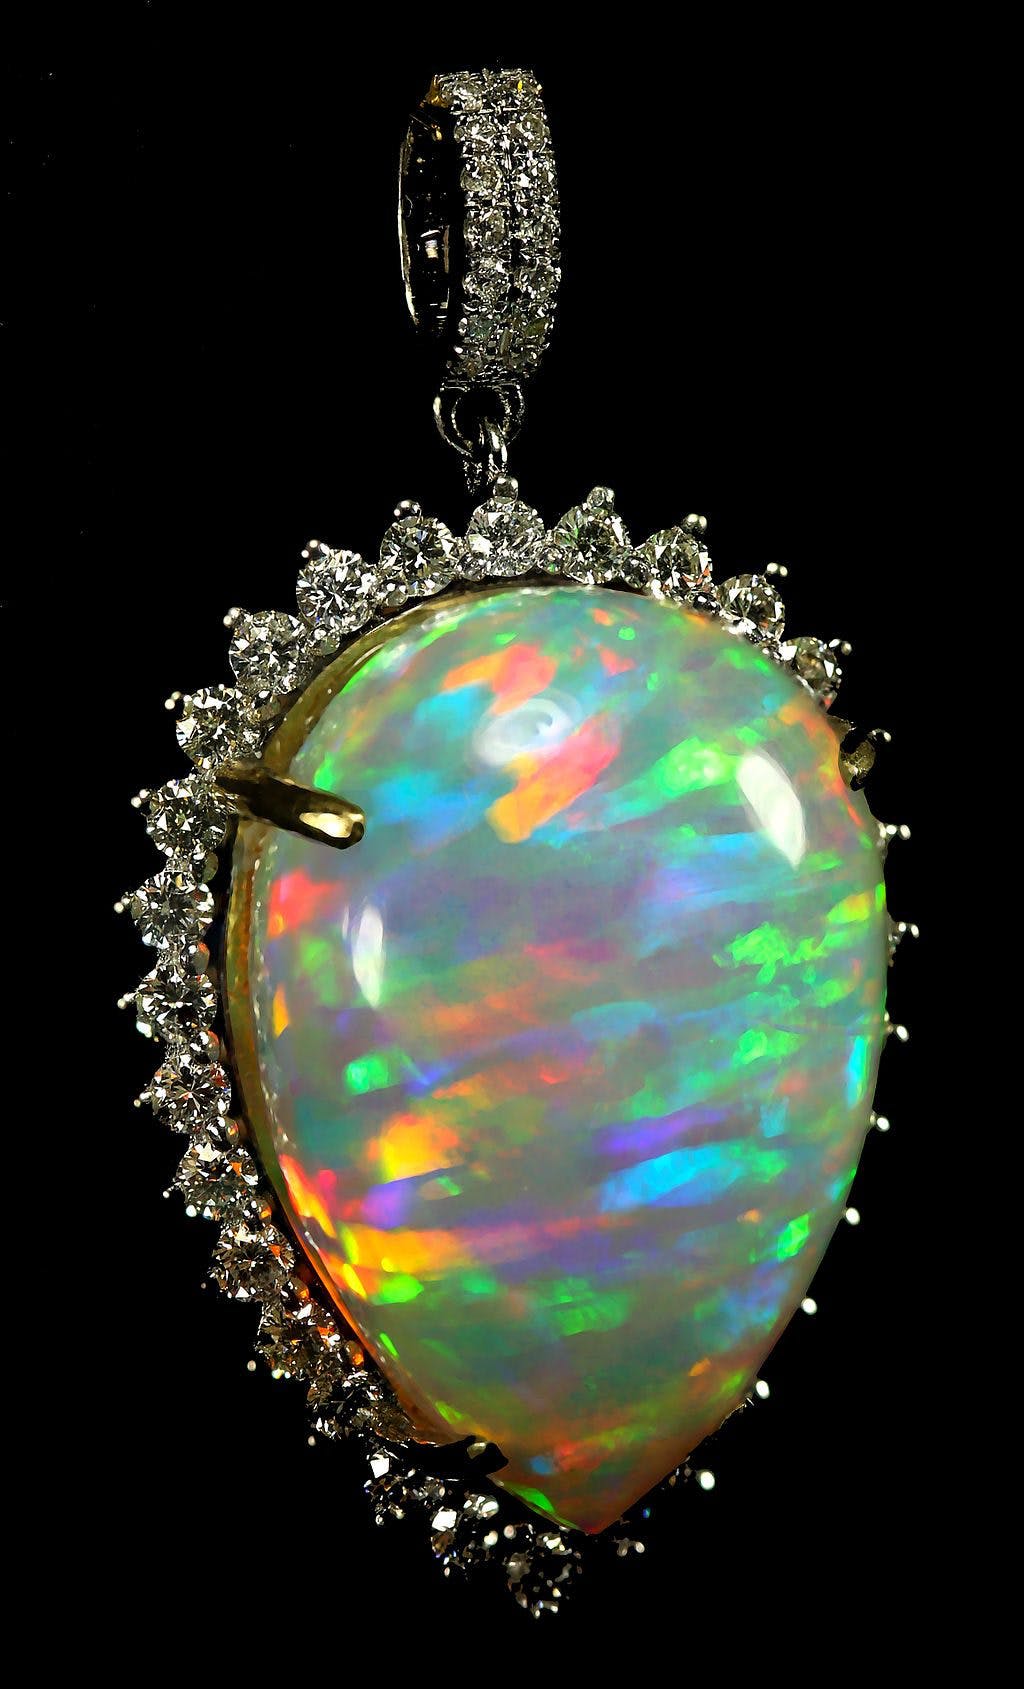 Ethiopian opal pendant